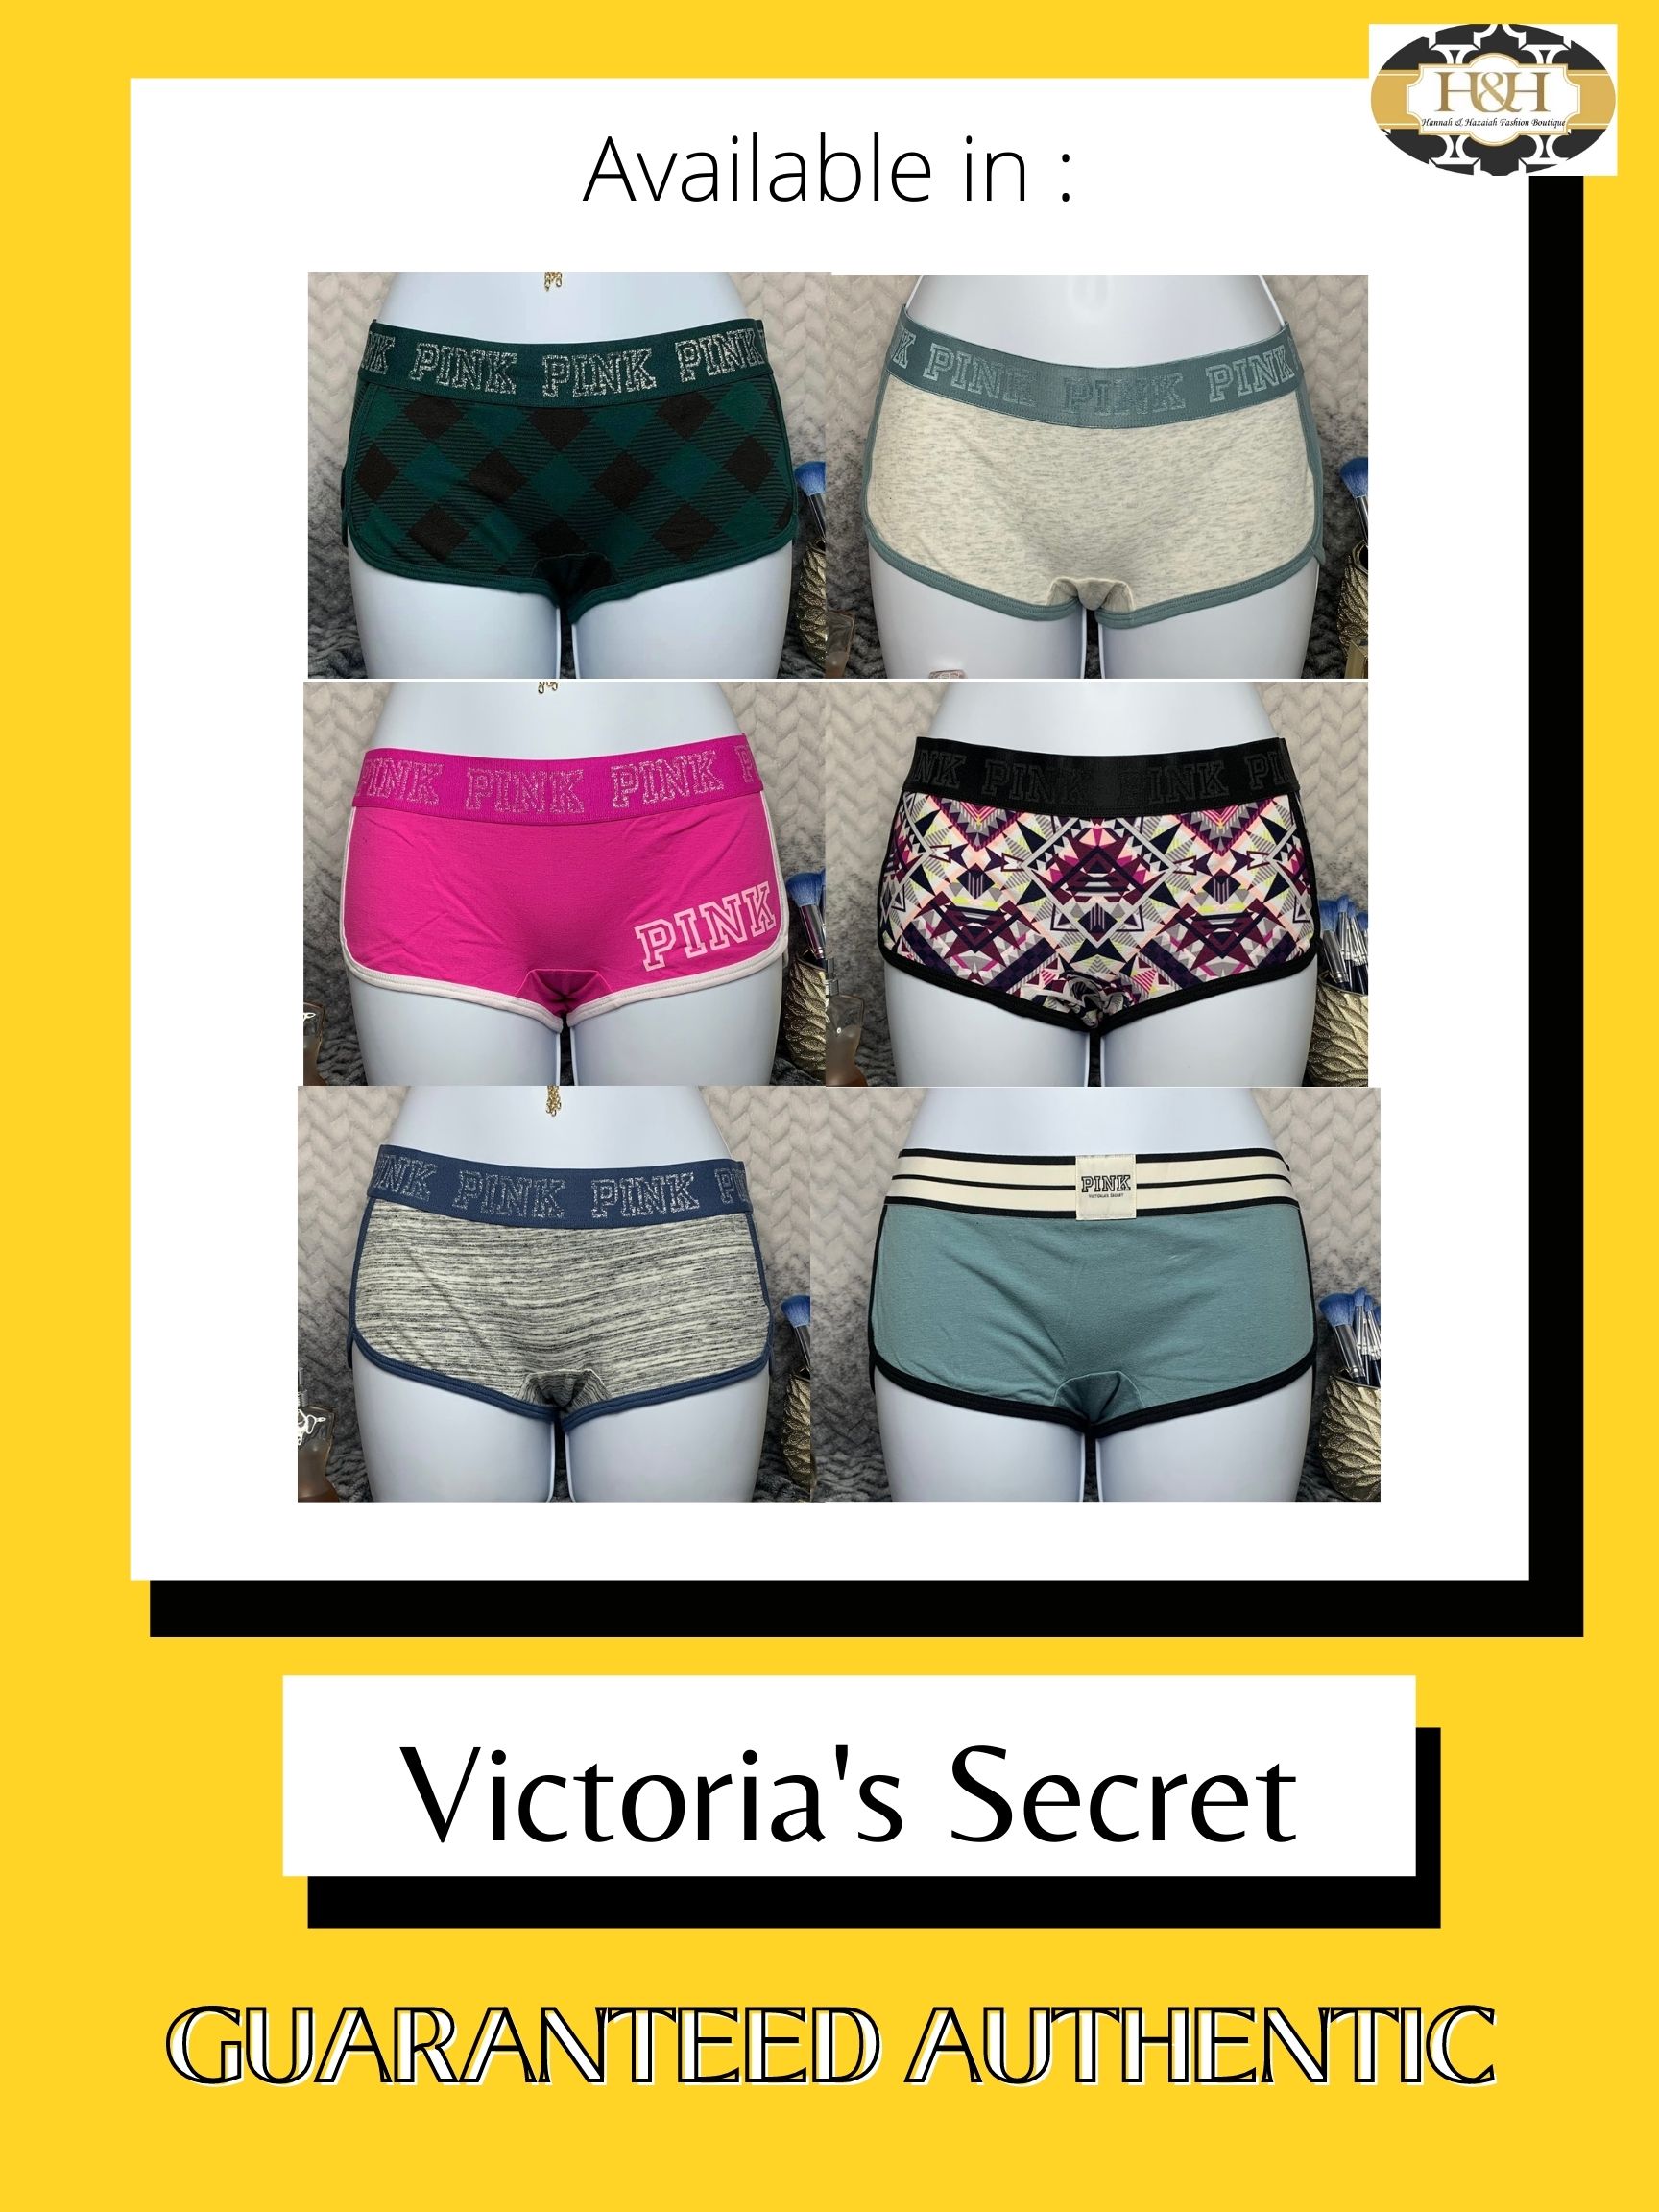 🇺🇸Authentic Victoria's Secret PINK Logo Shortie Underwear/Panty